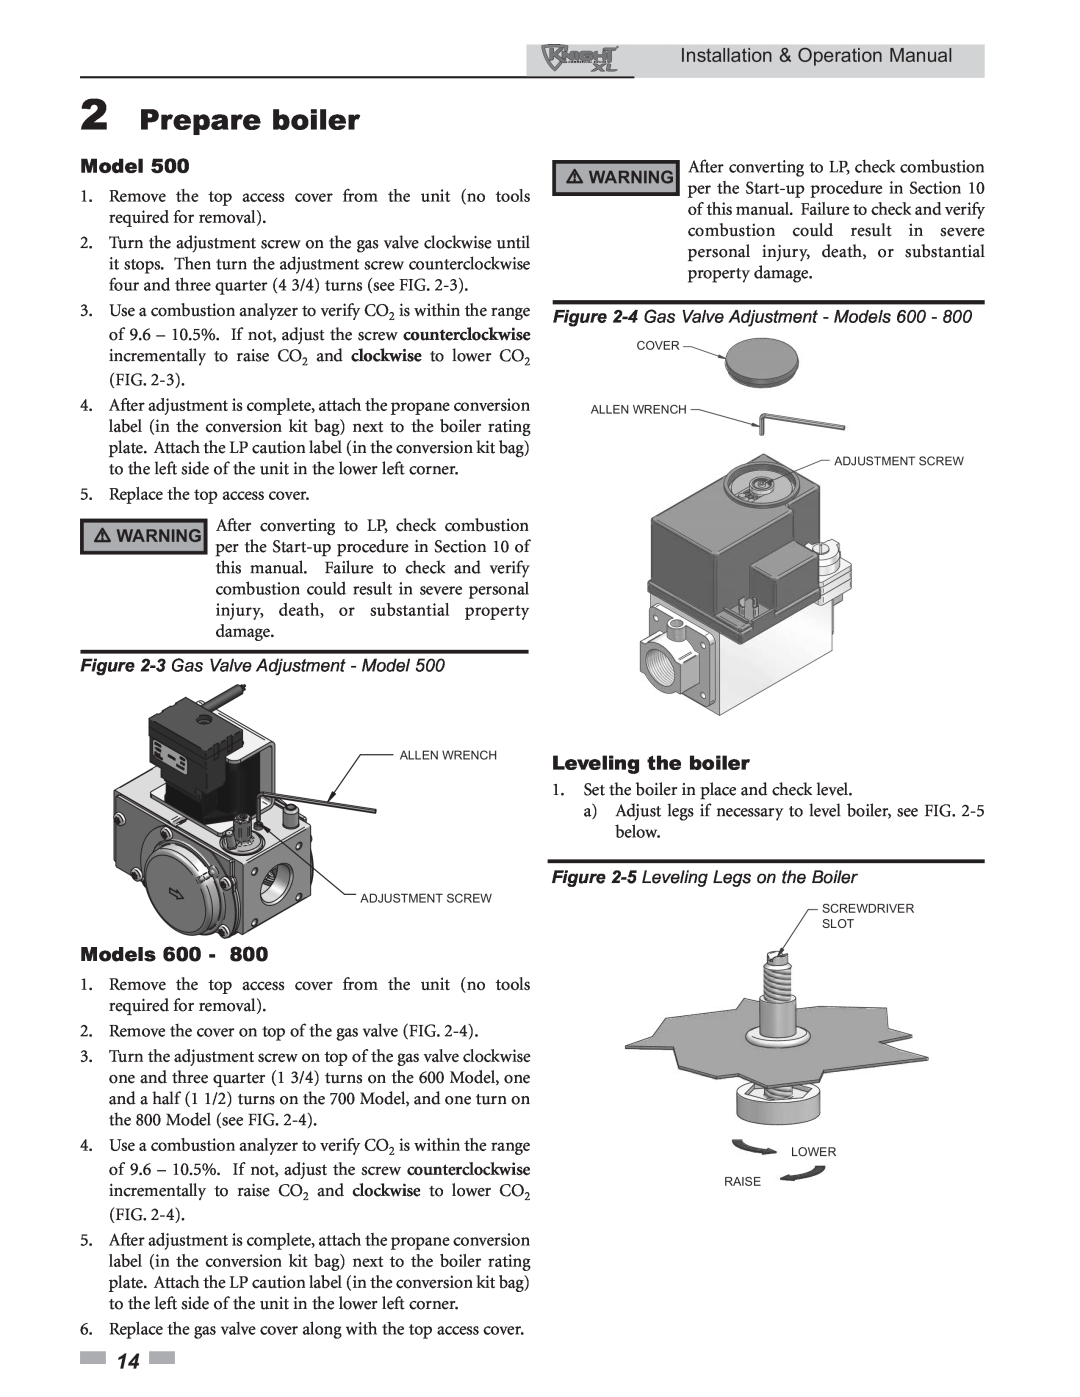 Lochinvar 399 operation manual 2Prepare boiler, Installation & Operation Manual, Leveling the boiler, Models 600 